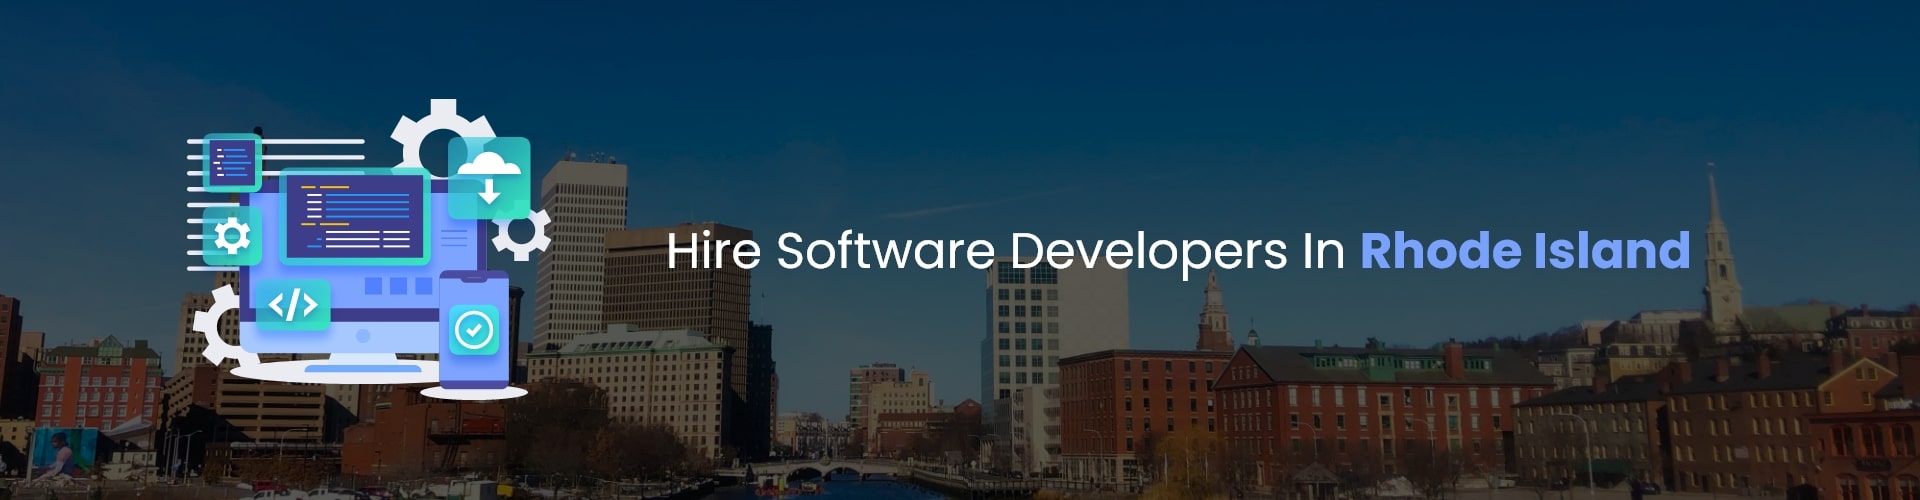 hire software developers in rhode island